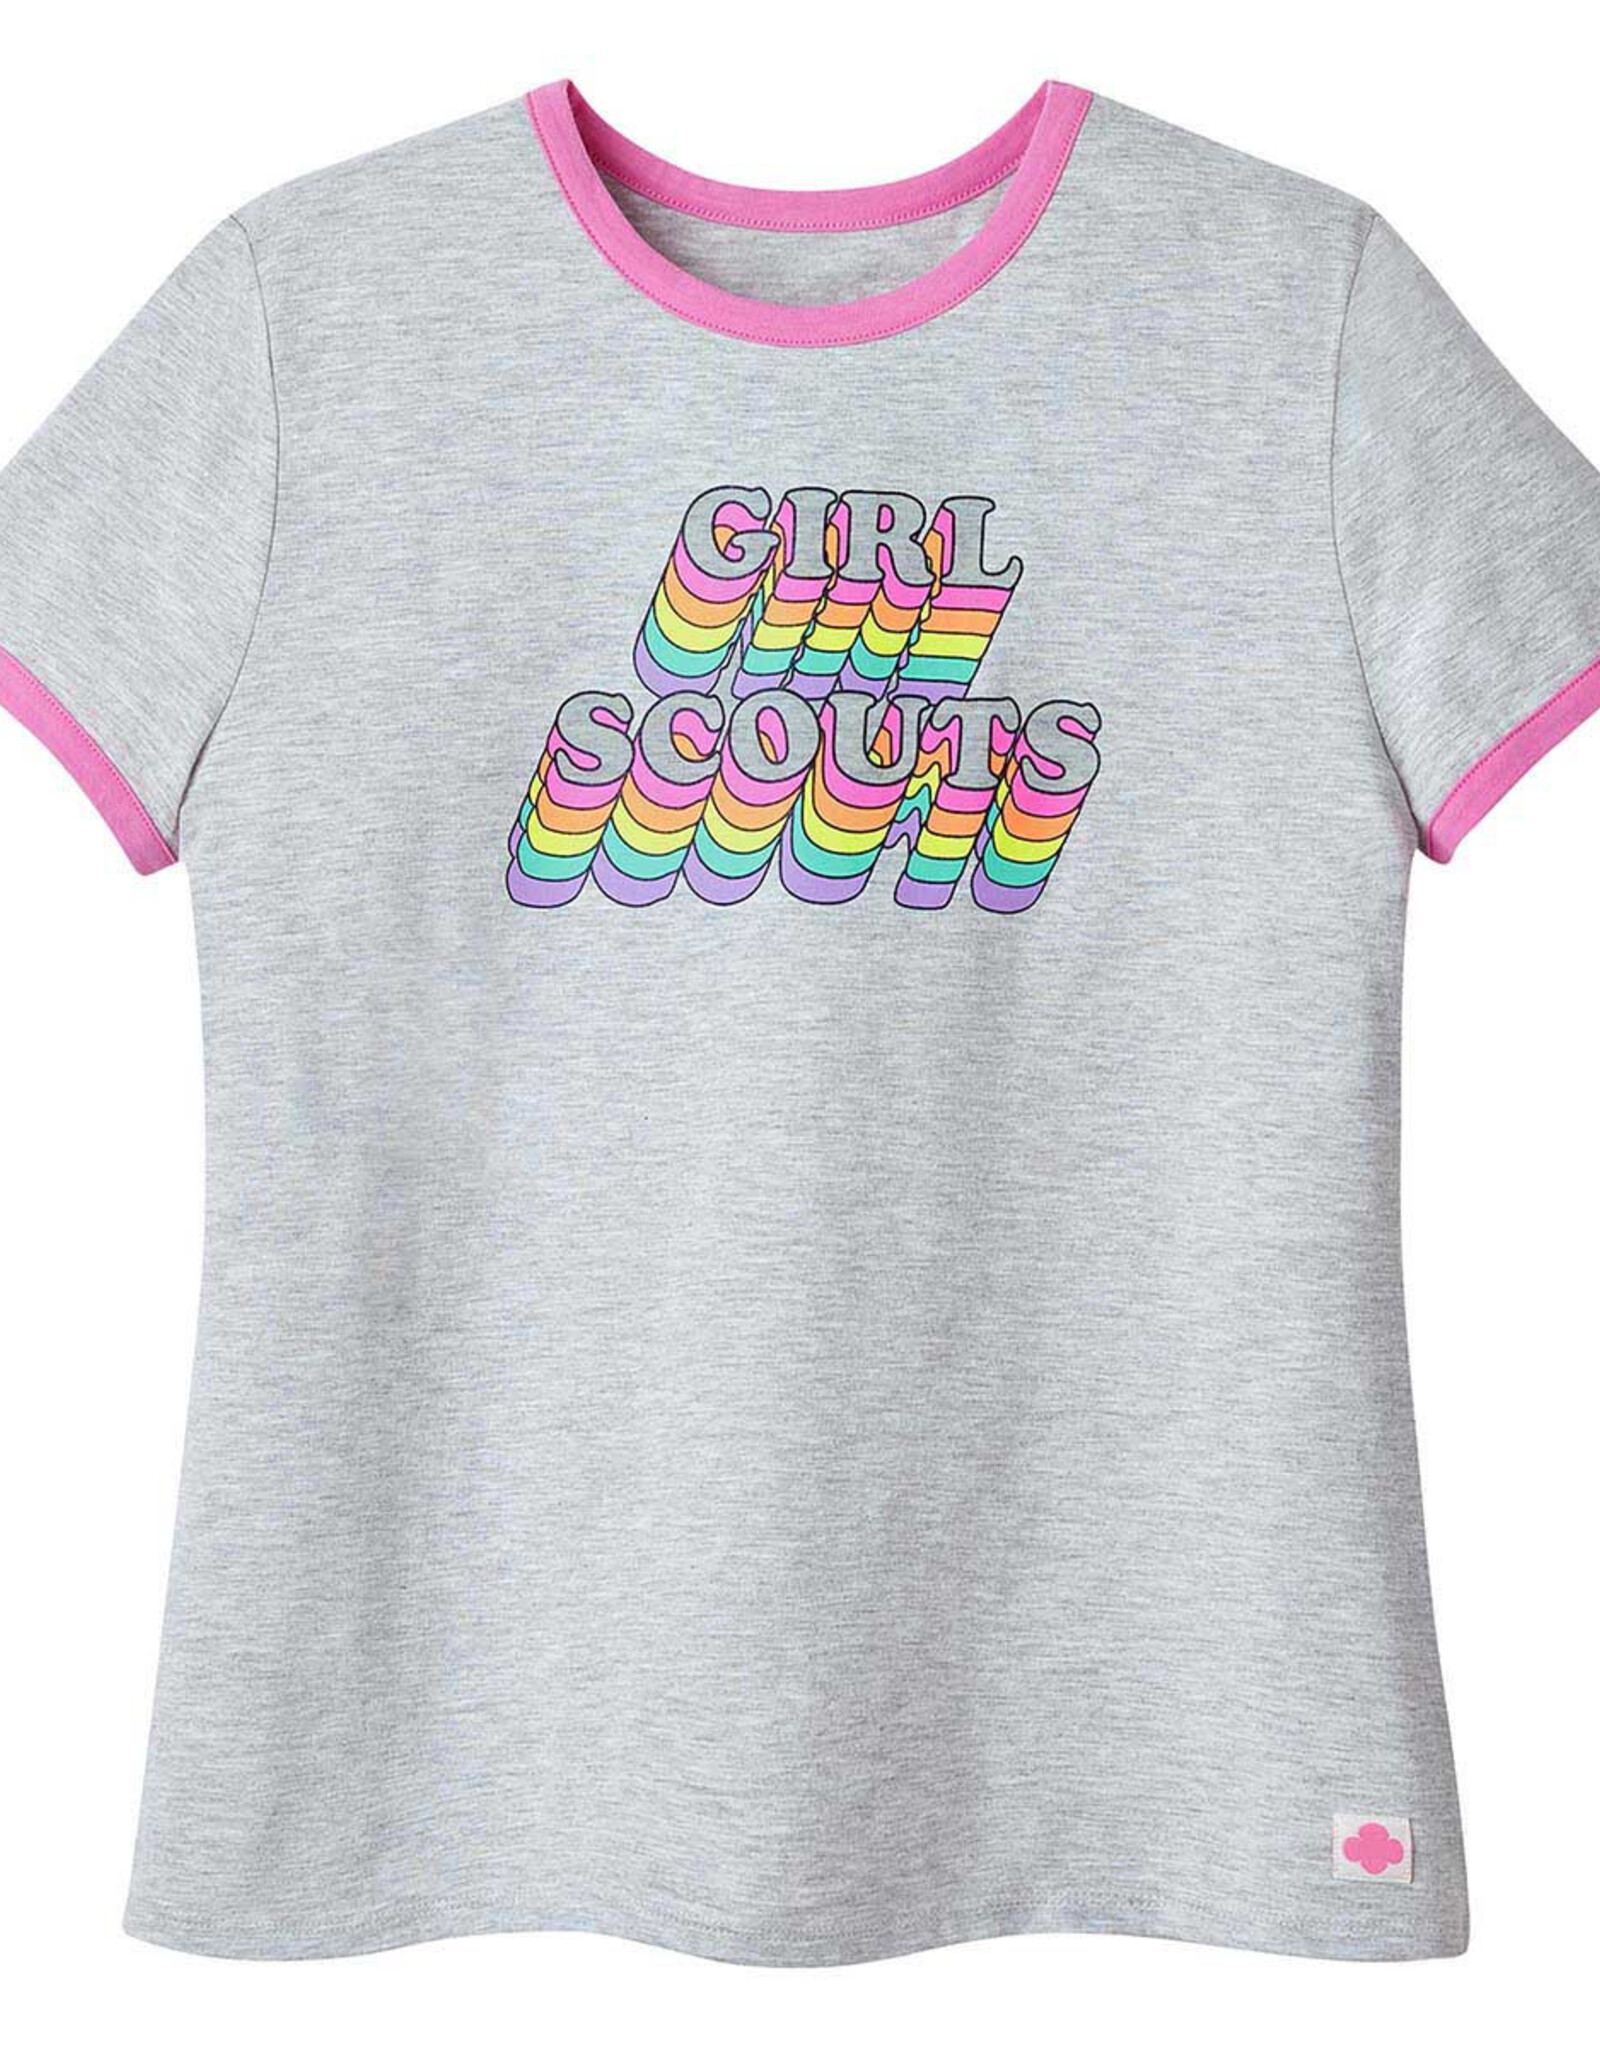 GSUSA Rainbow Ringer T-Shirt - Women's